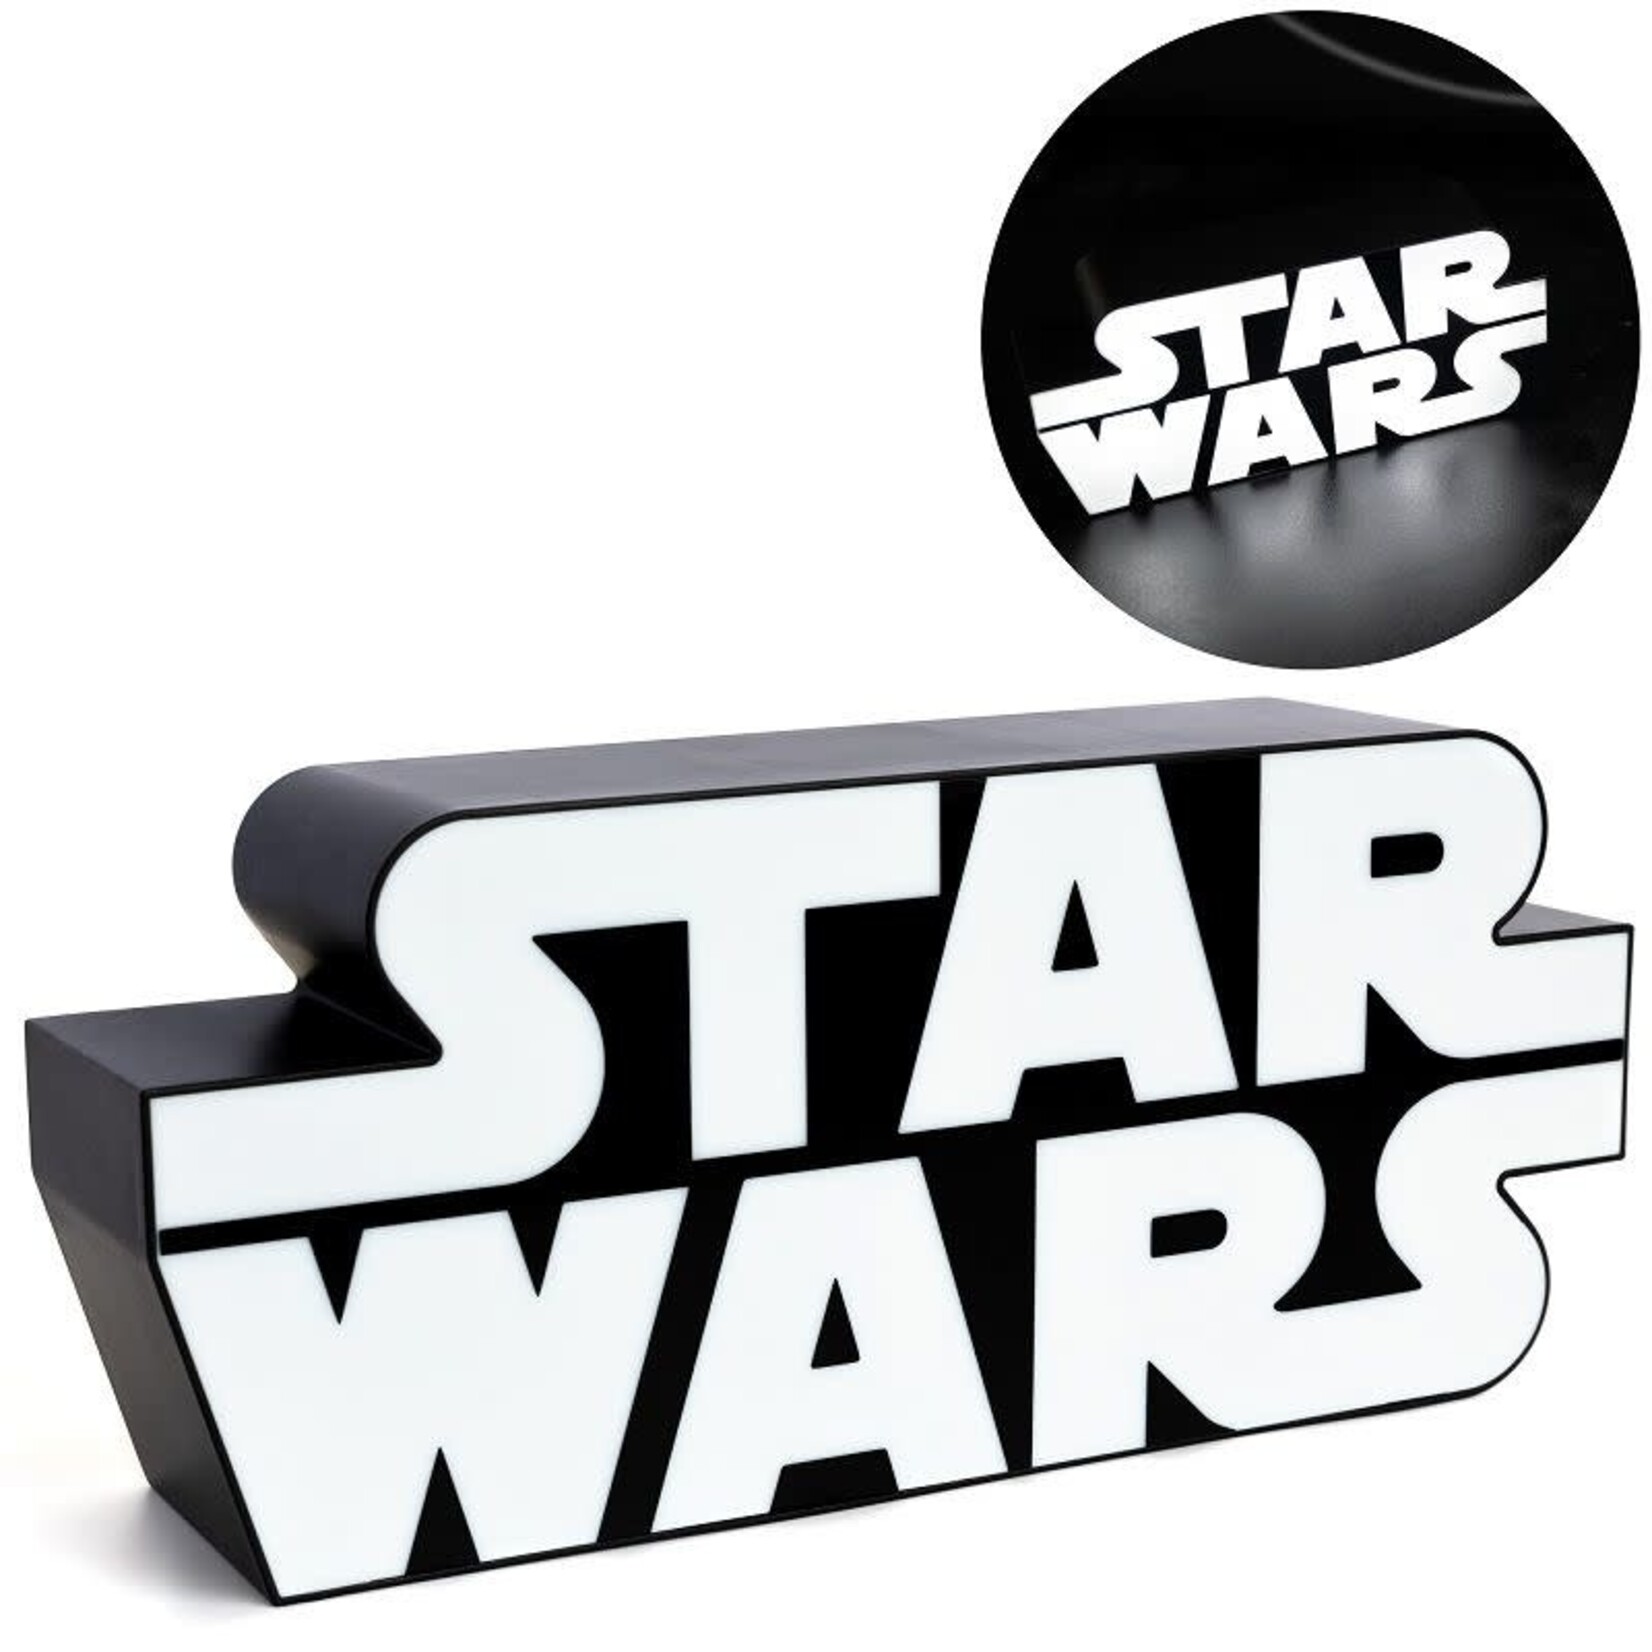 Star Wars Star Wars - Star Wars Logo Light Box Lamp